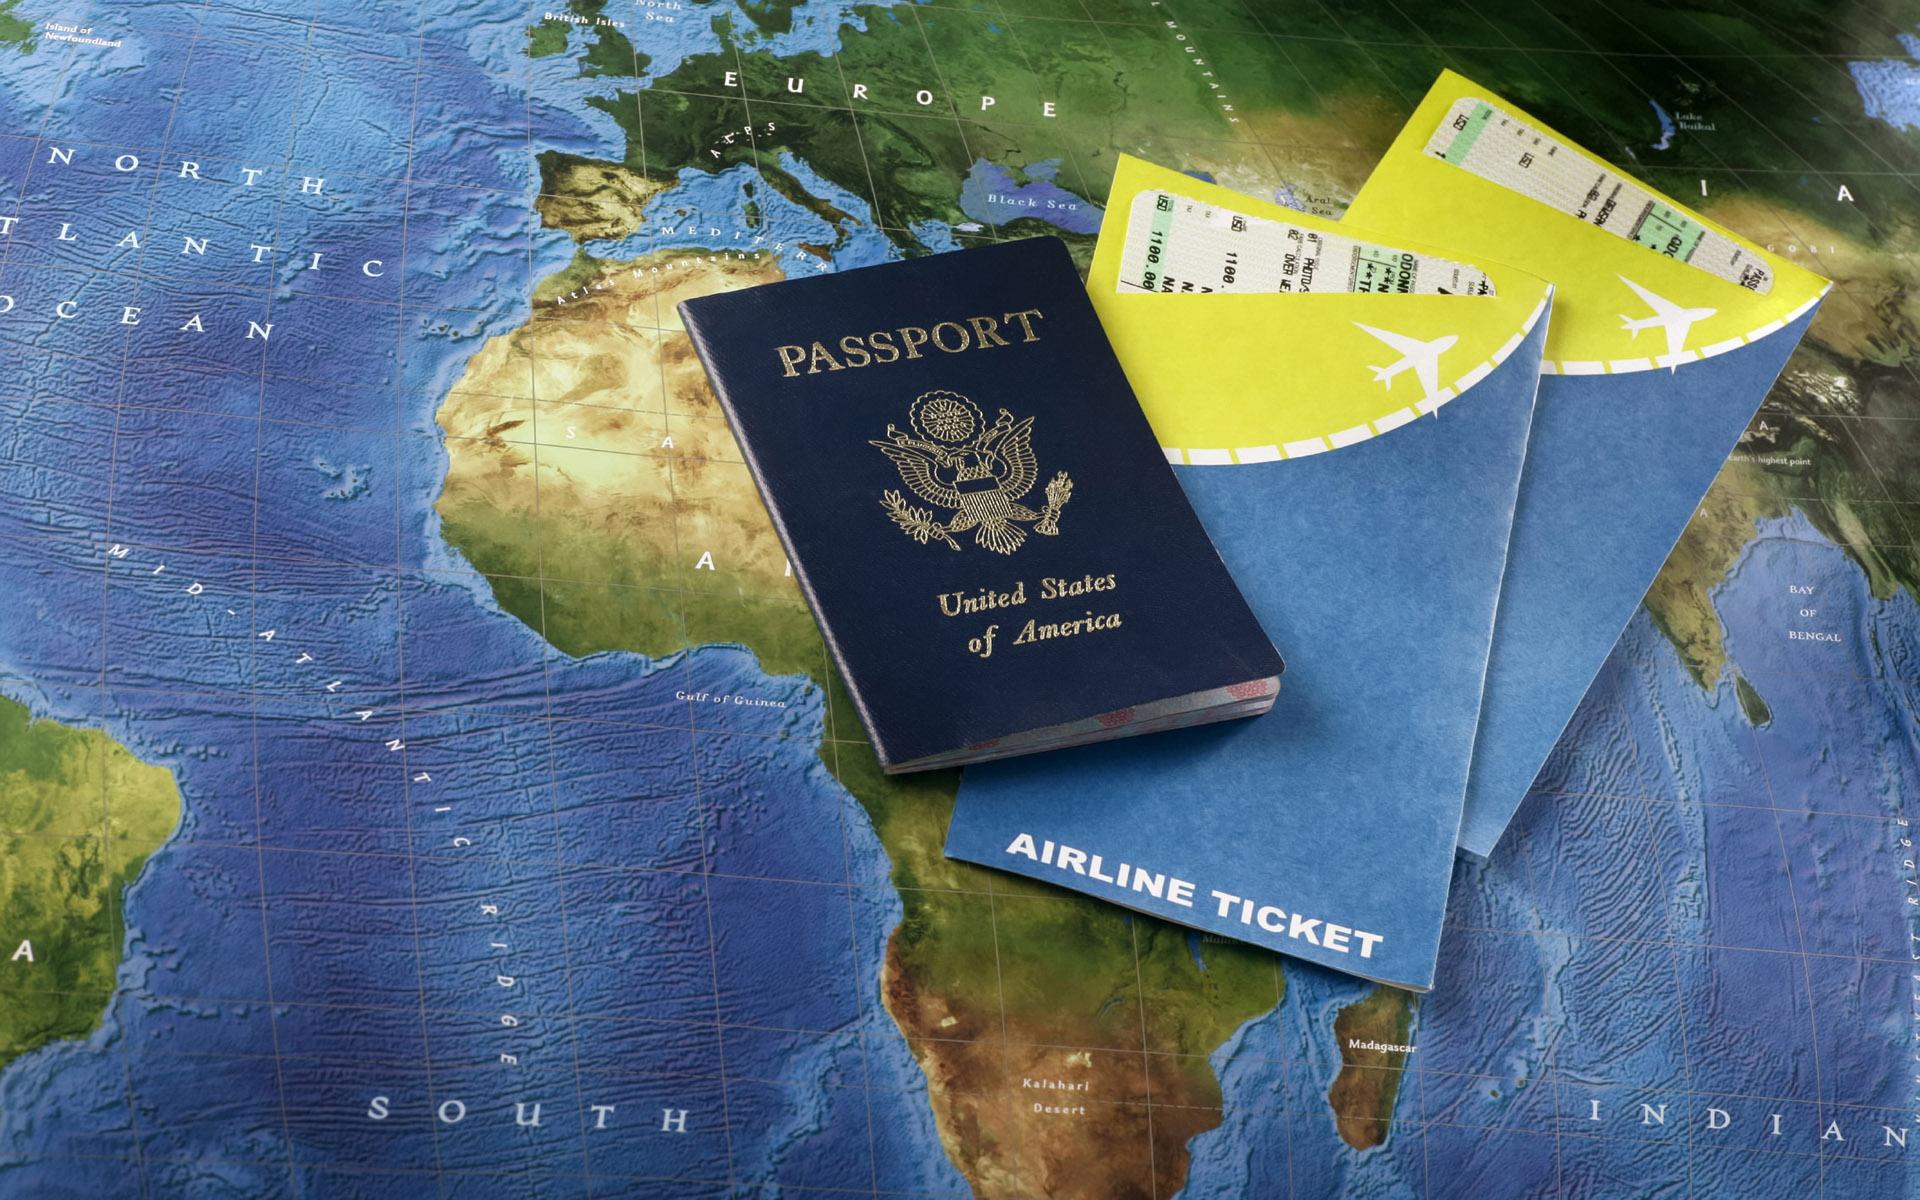 Passport Visa plane ticket wallpaper and image